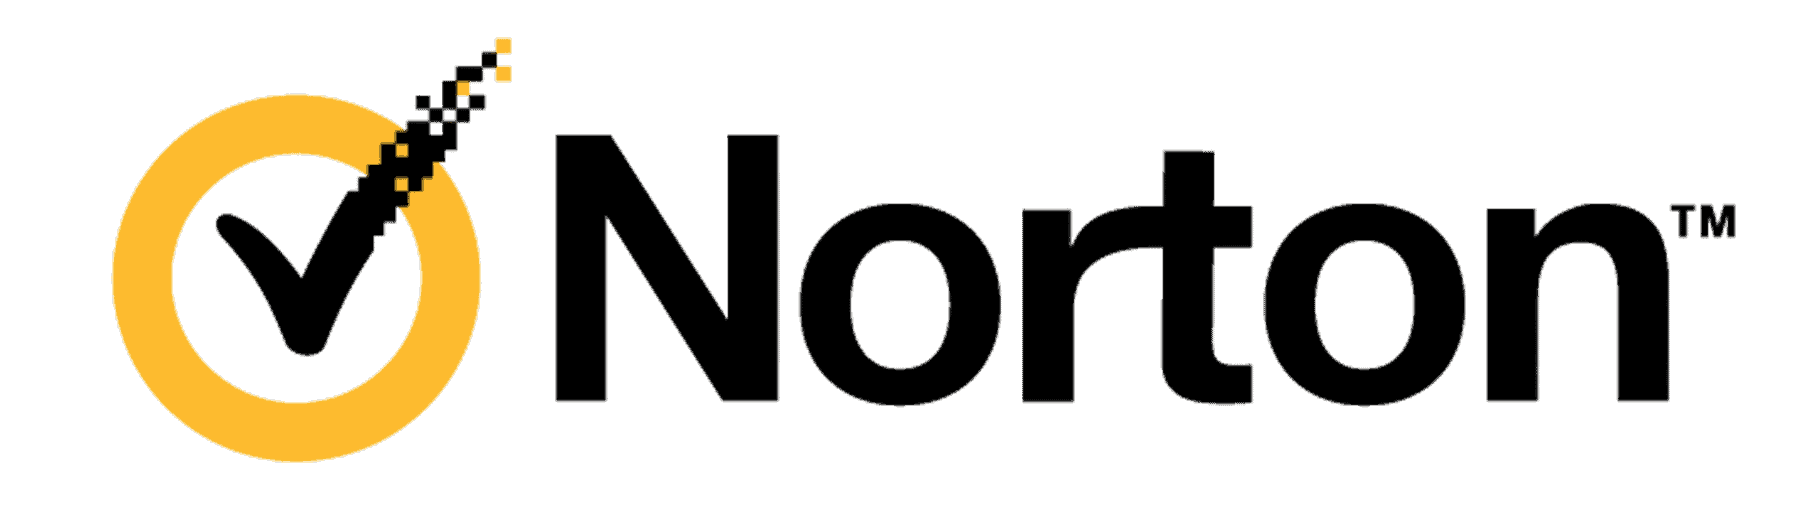 Norton Secure VPN Product Logo